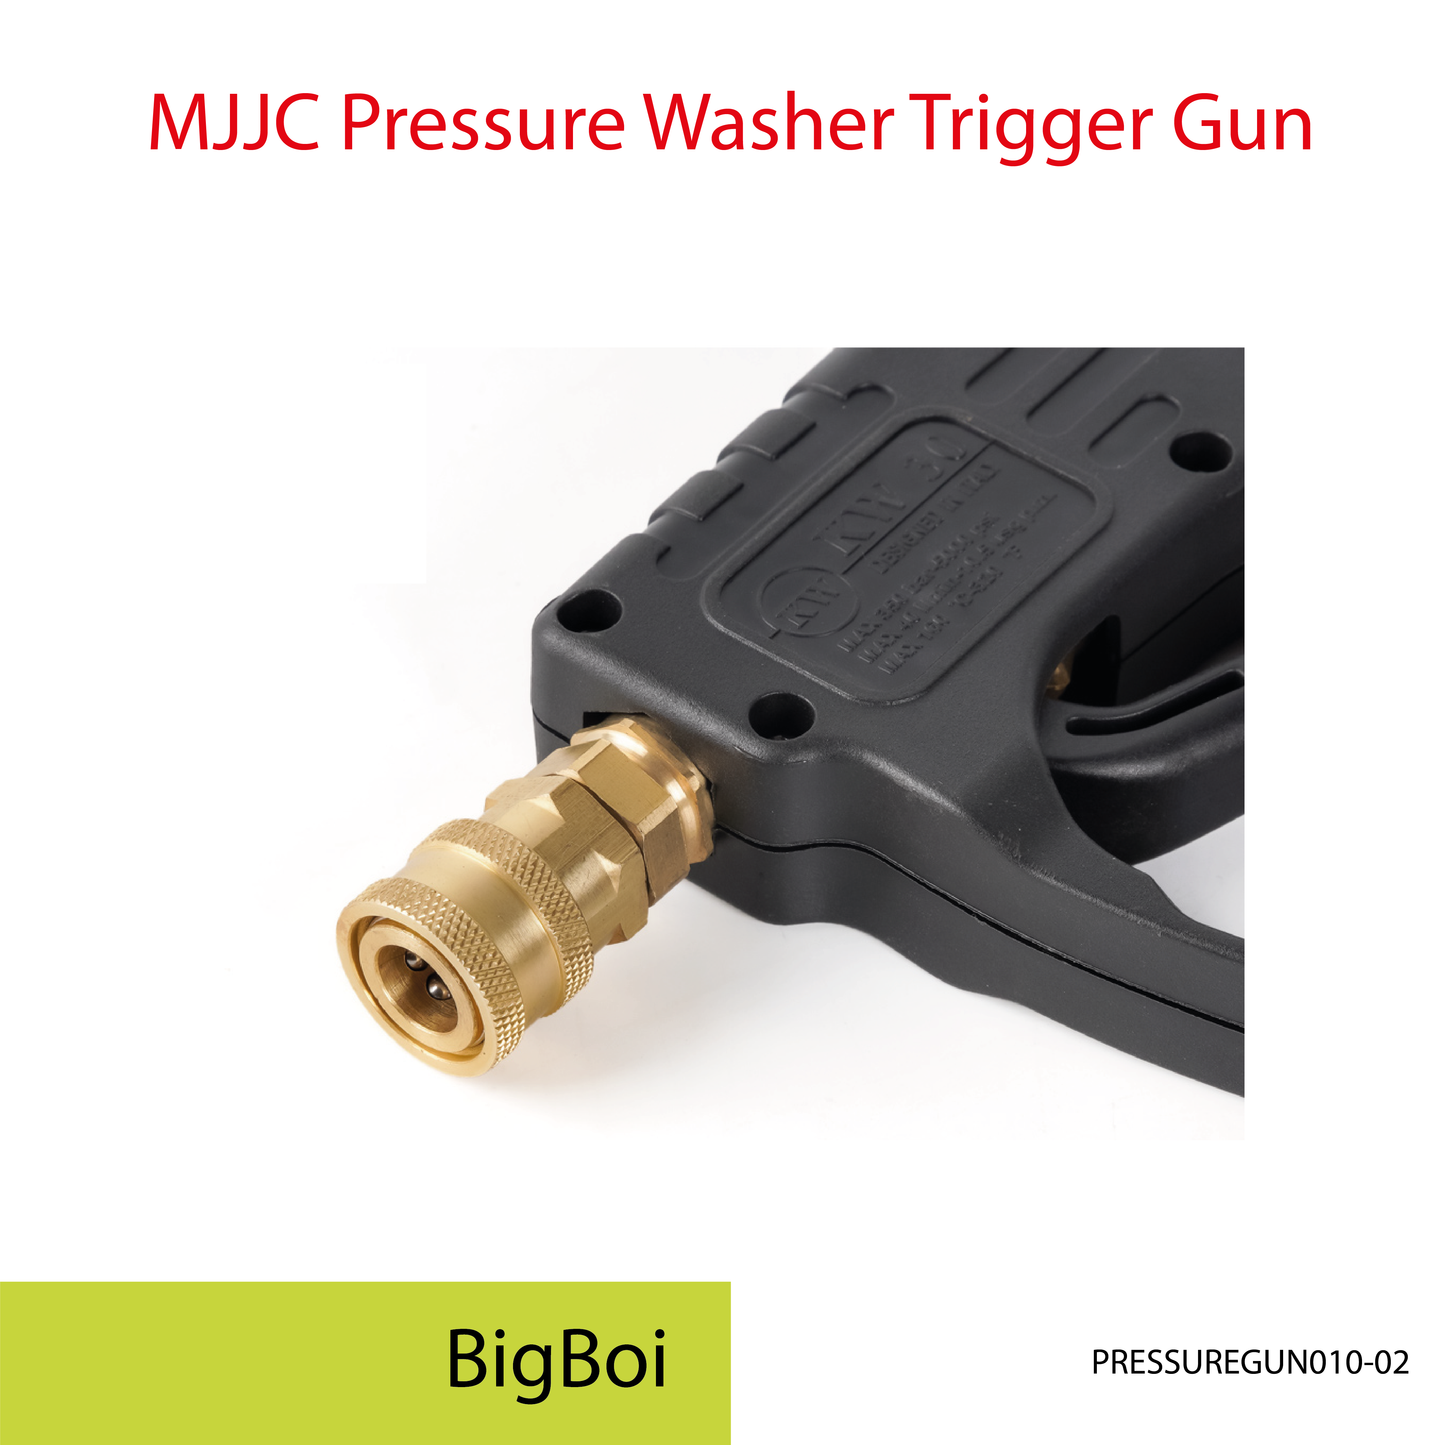 Big Boi -  MJJC Light Weight Pressure Washer Trigger Spray Gun with Live Swivel